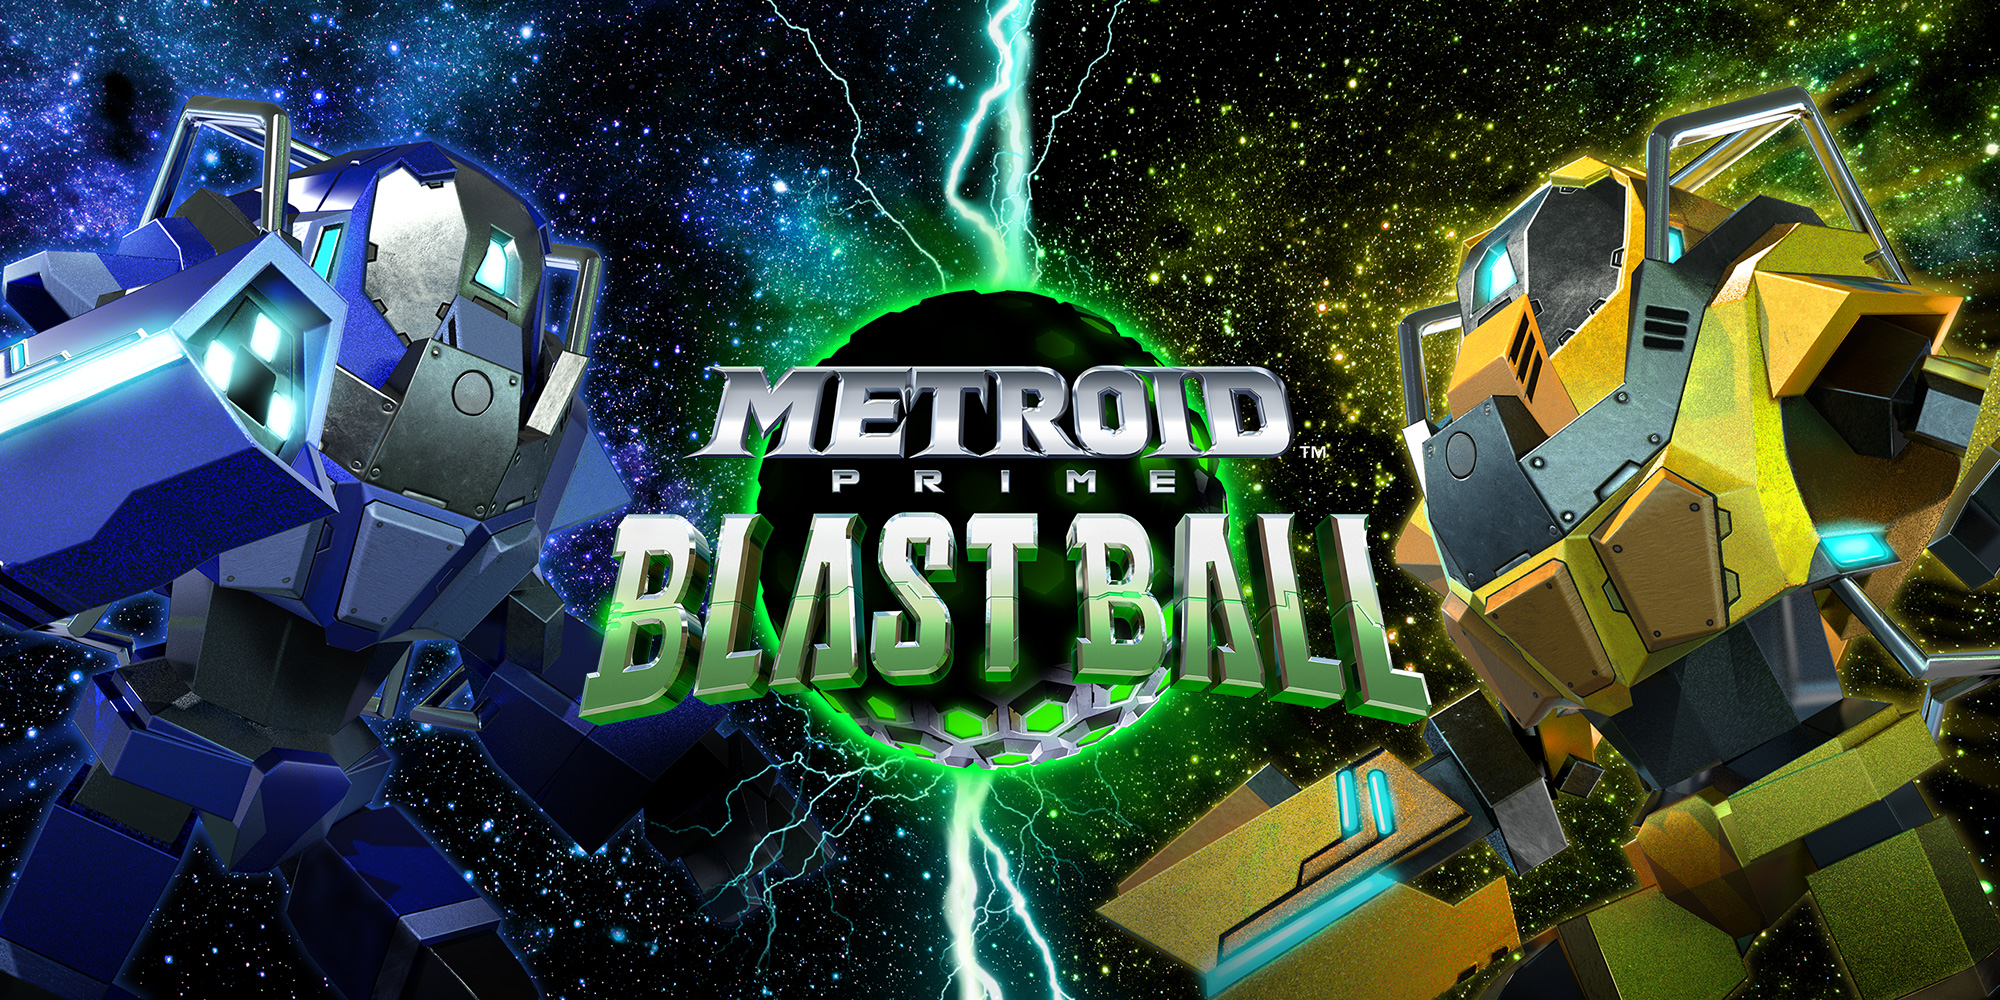 Metroid Prime Blast Ball